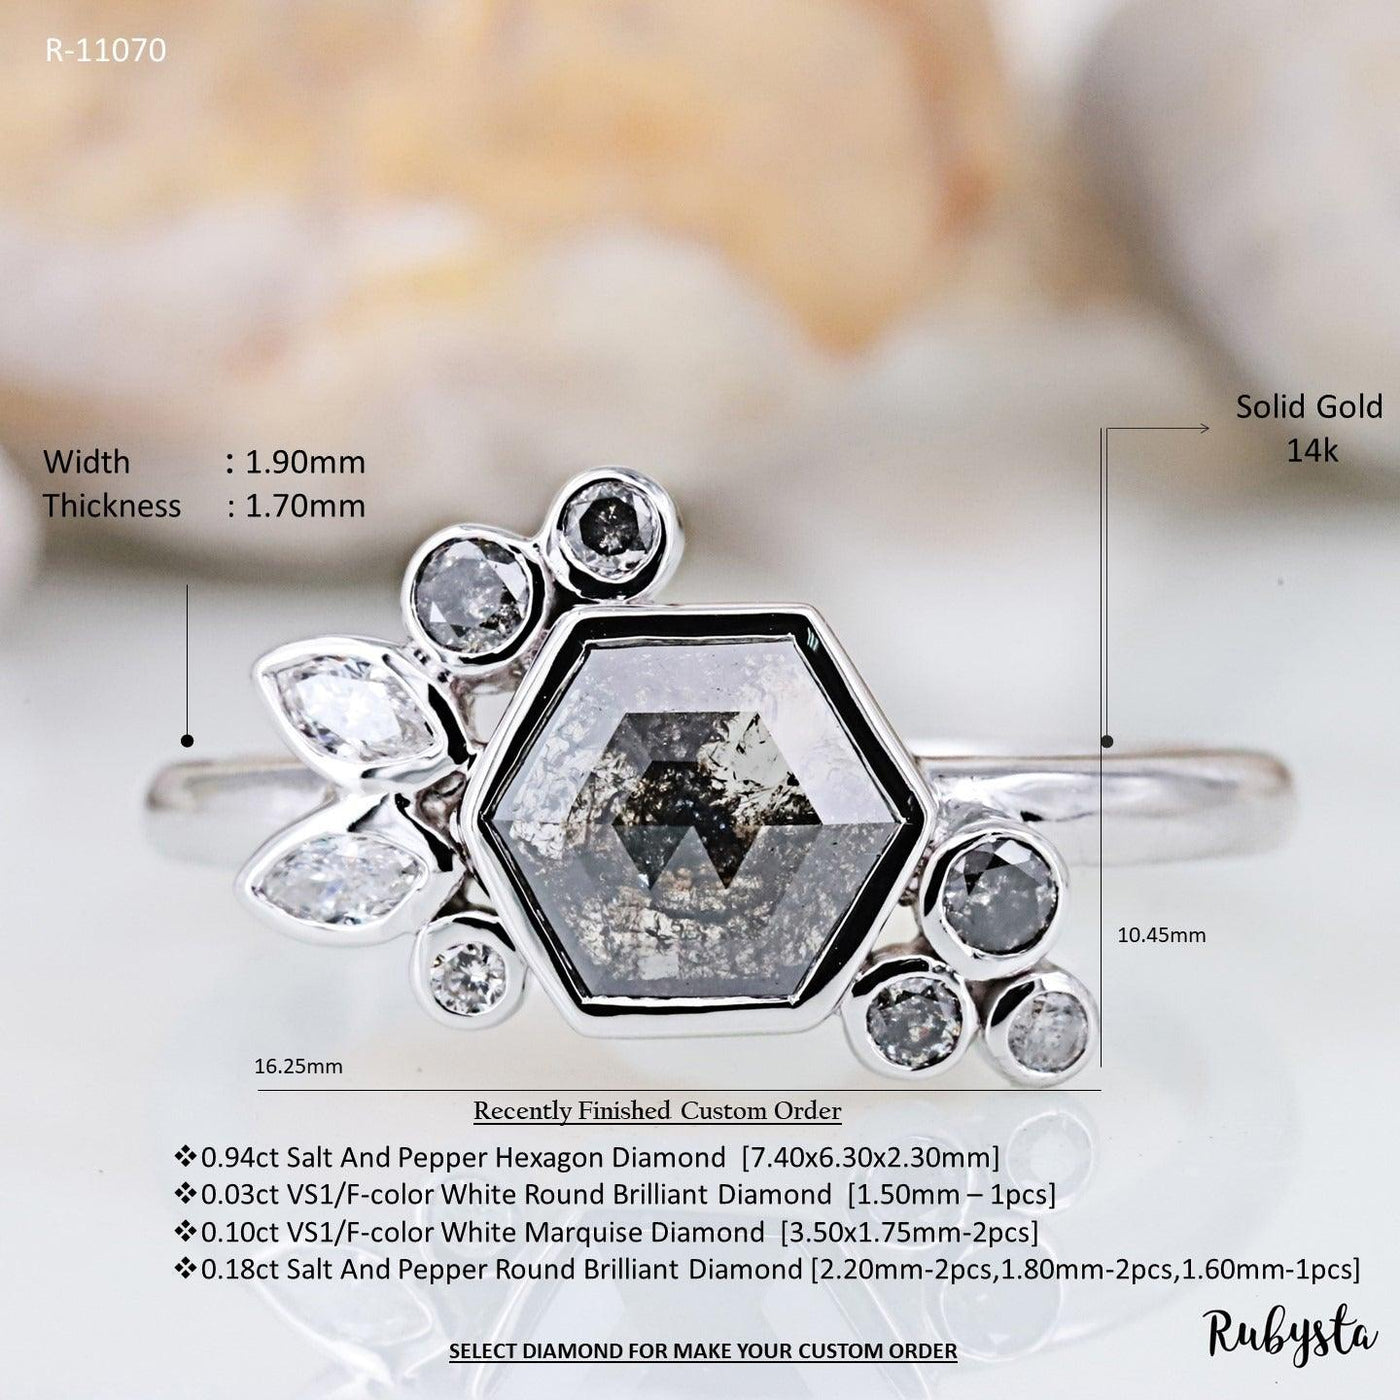 Vintage Engagement Ring | Hexagon Diamond Ring | Promise Ring